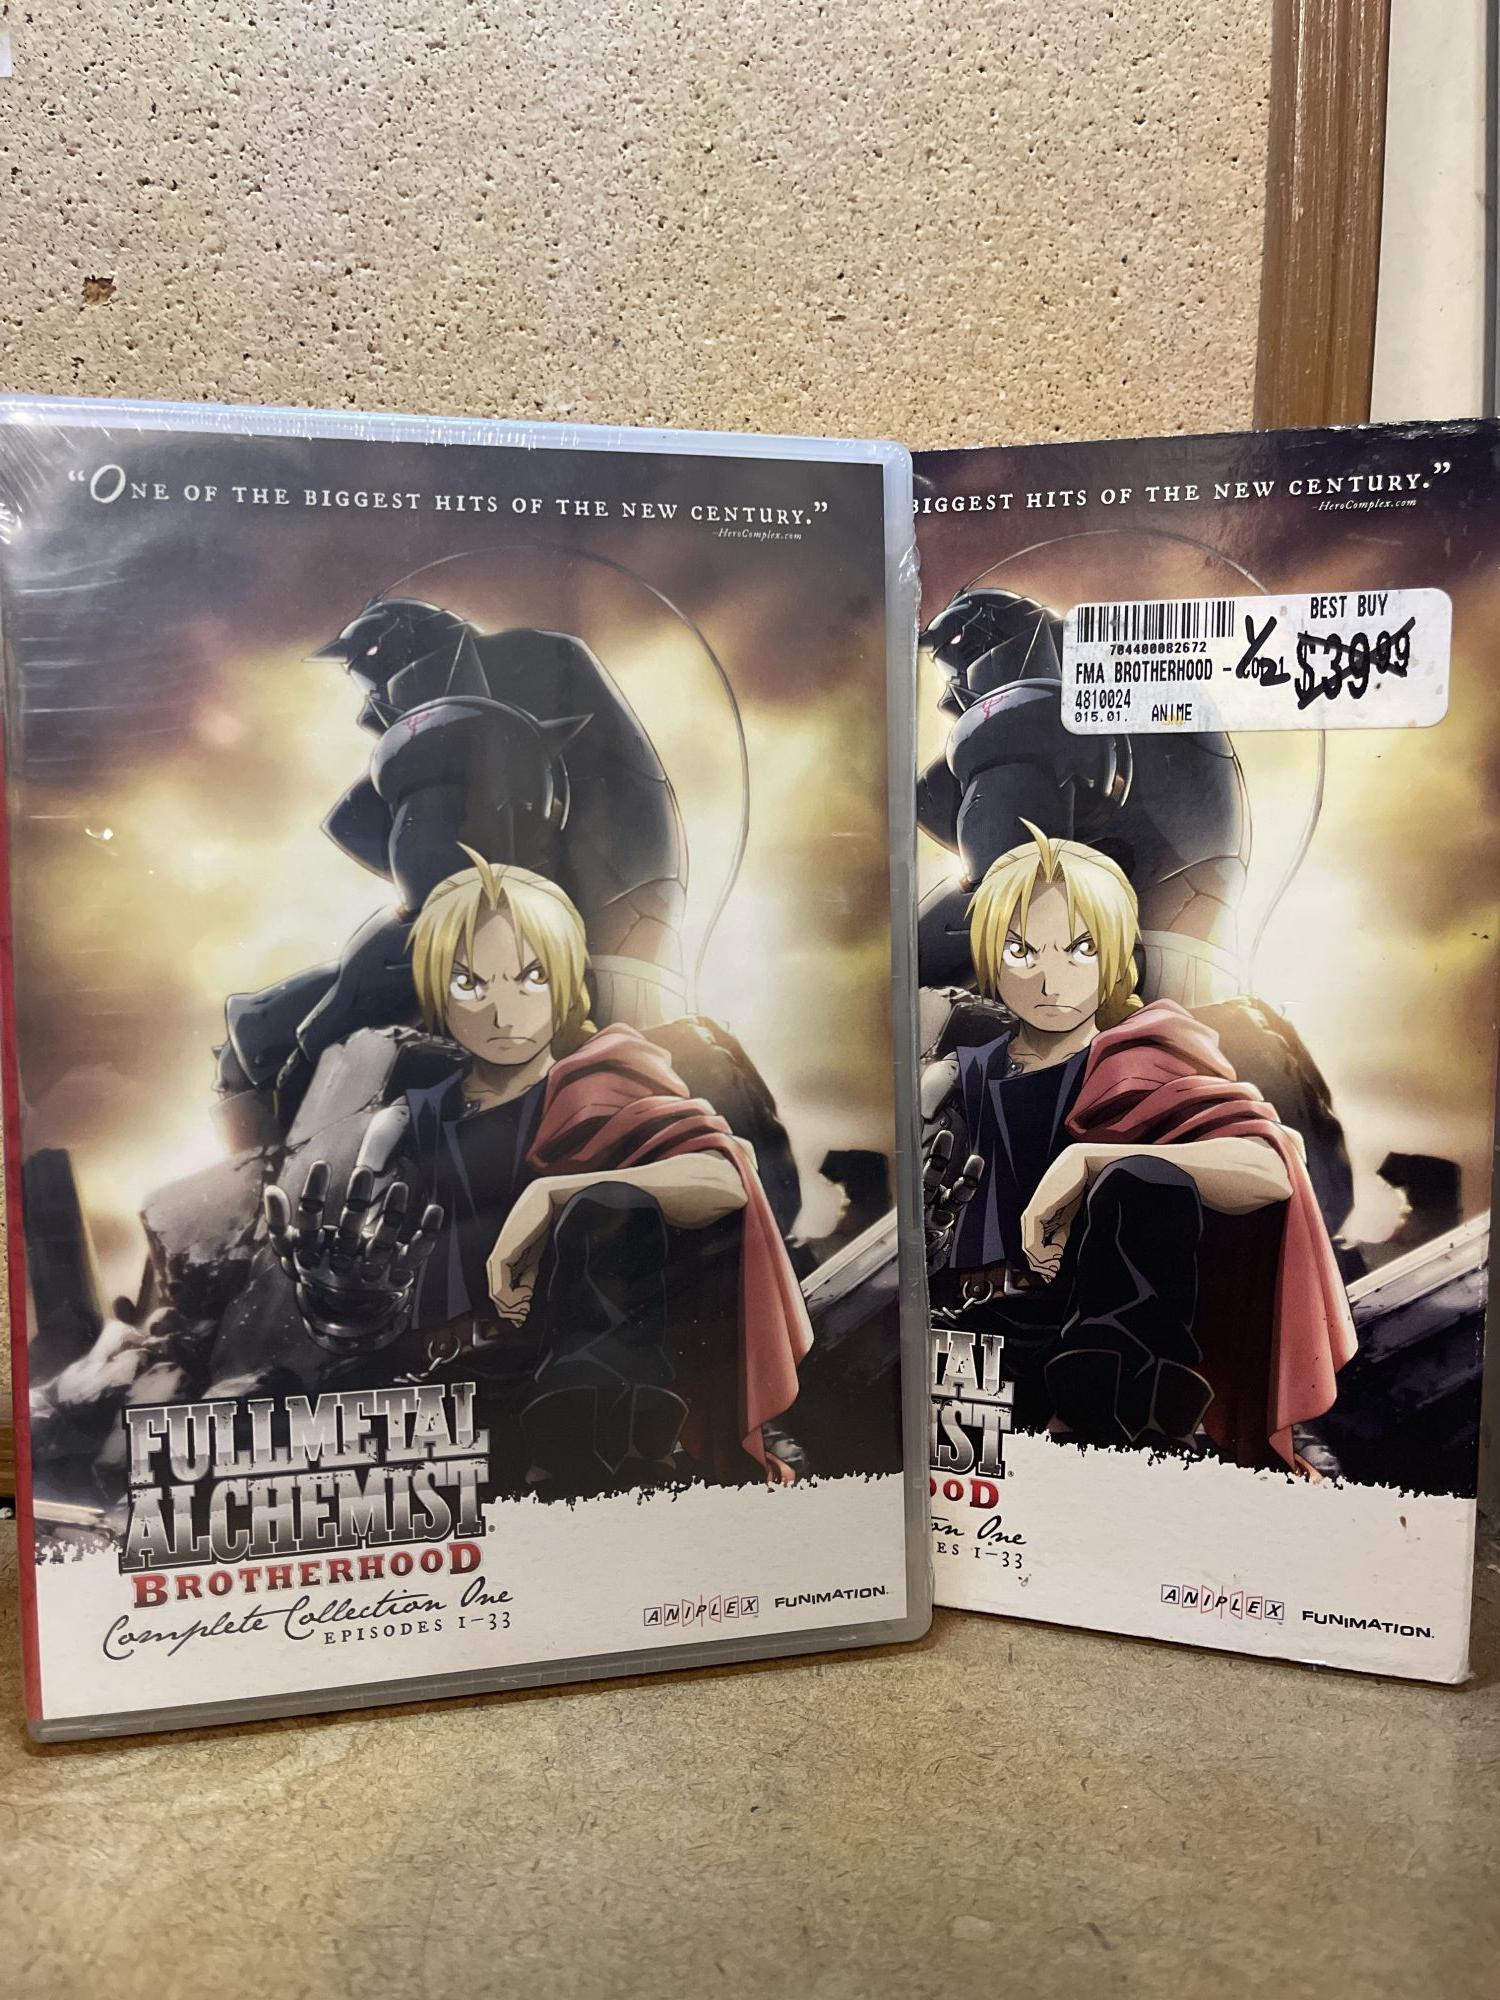 Fullmetal Alchemist Brotherhood: Part 1 Blu-ray